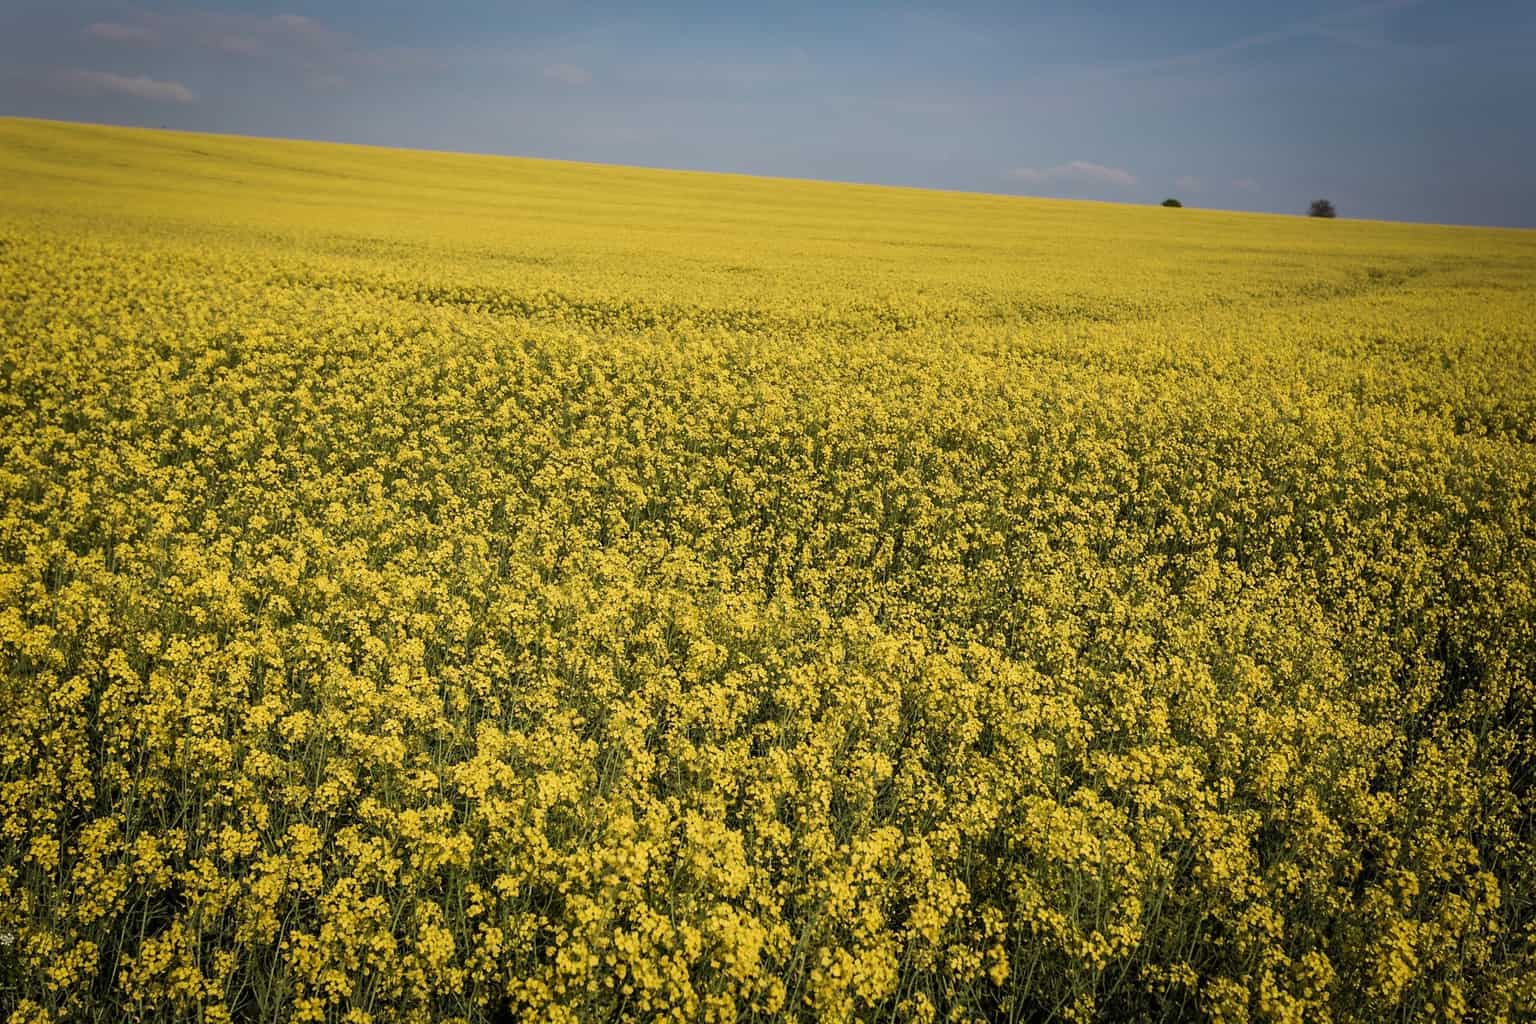  Bright vibrant yellow fields - Rick McEvoy - Dorset Photographer 